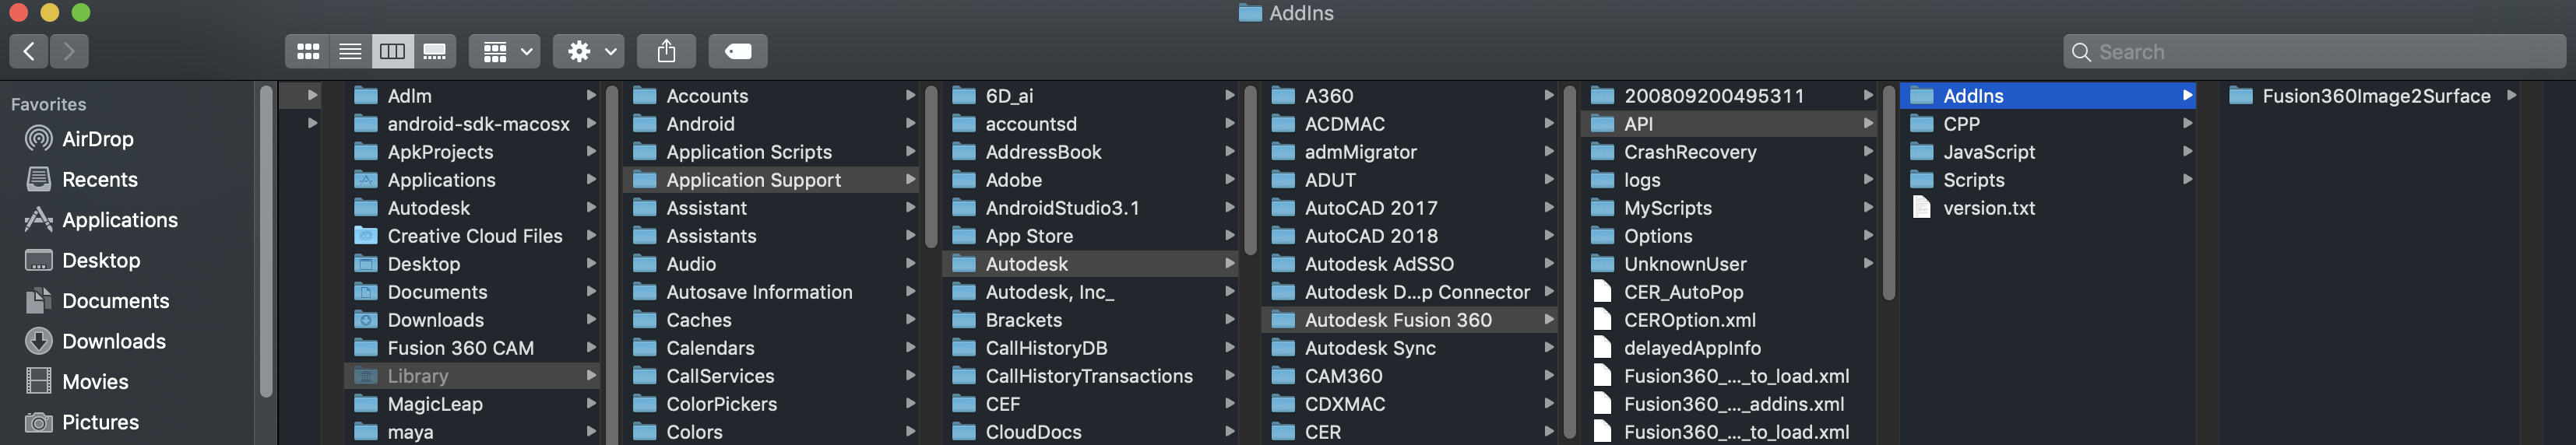 Fusion 360 Addins Folder